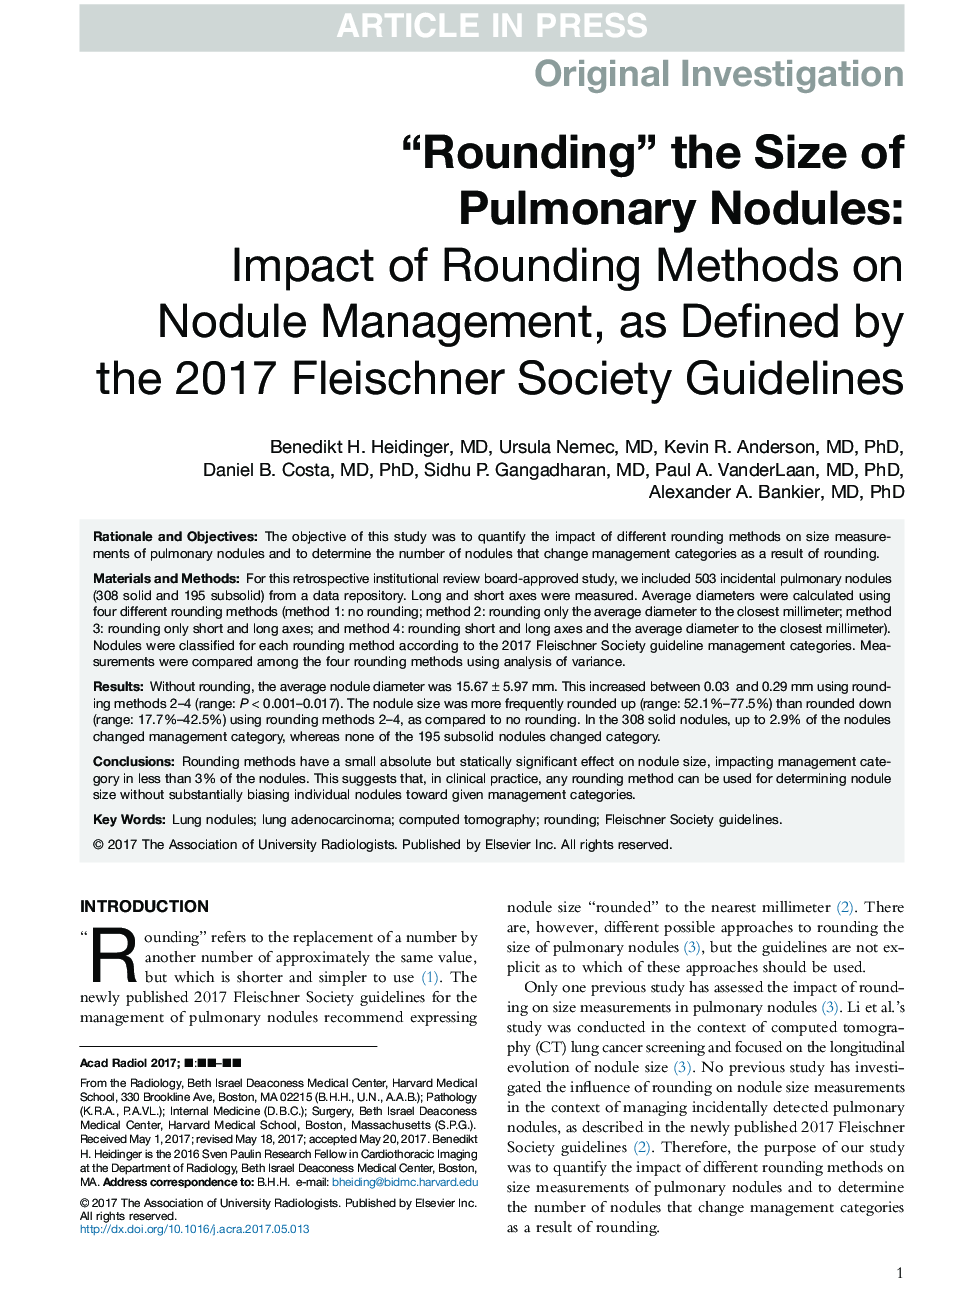 “Rounding” the Size of Pulmonary Nodules